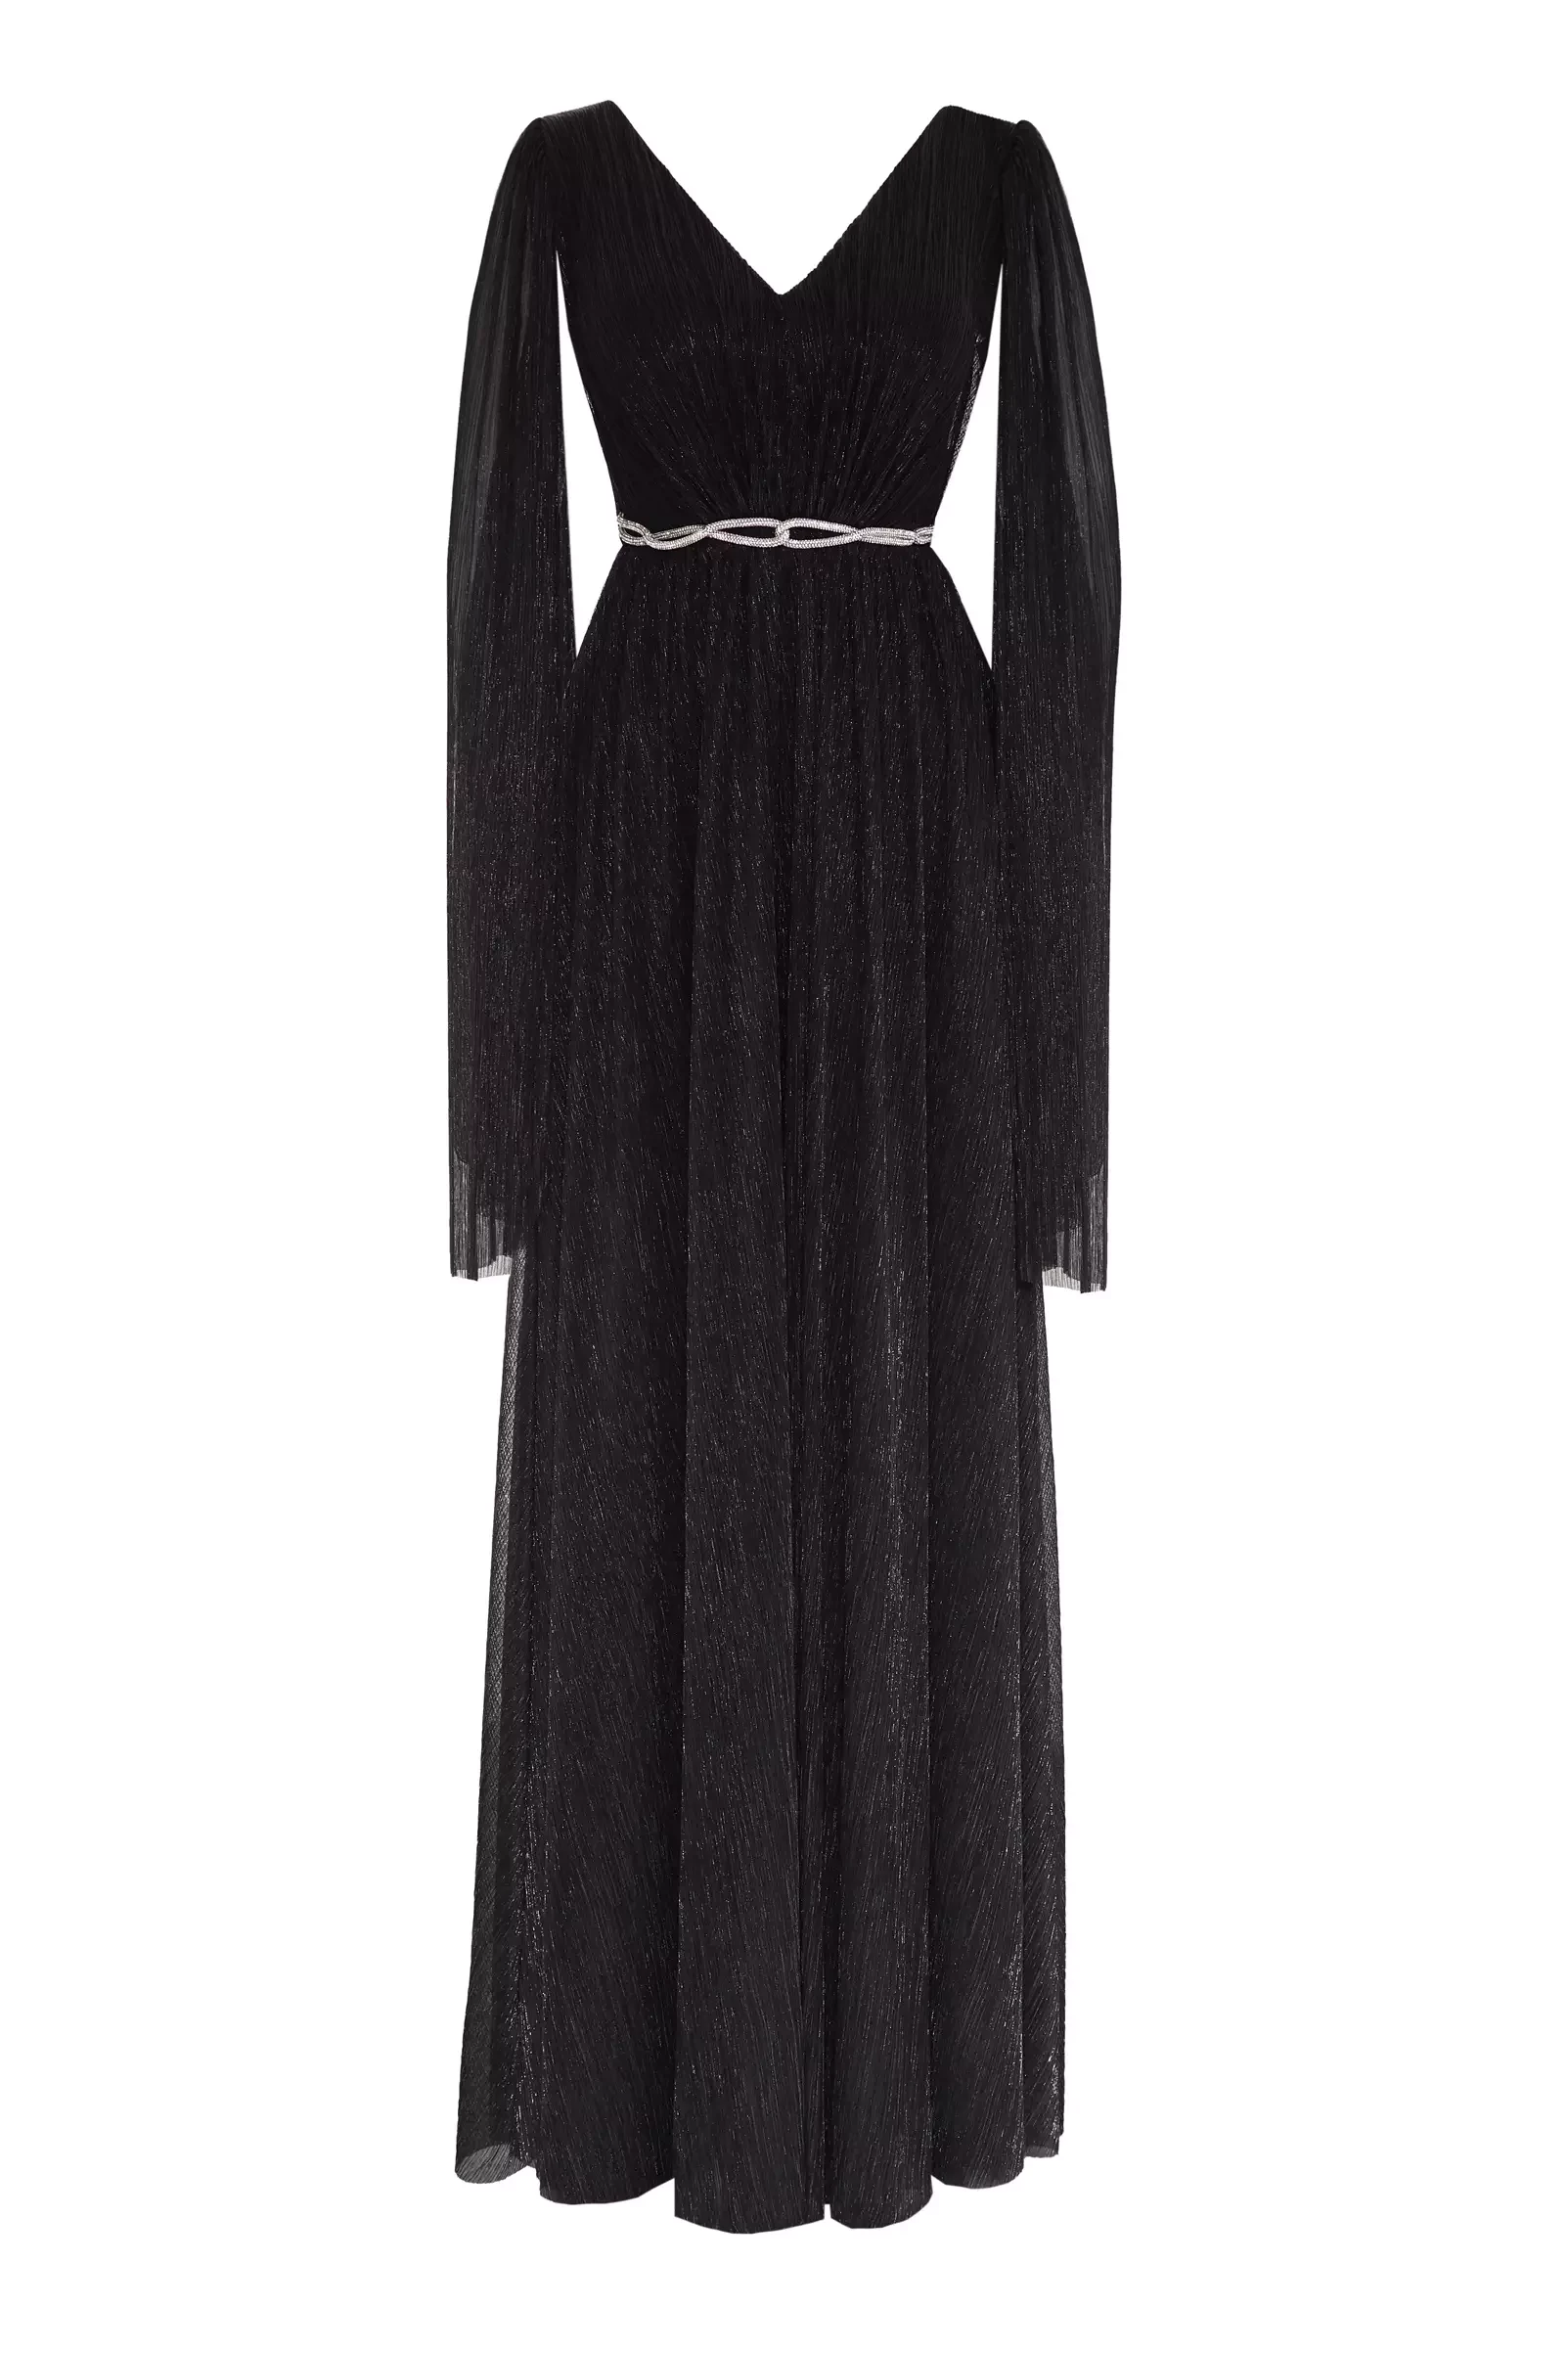 Halter Top Baroque Damask Print Black White Maxi Dress w/ Side Slit – Niobe  Clothing